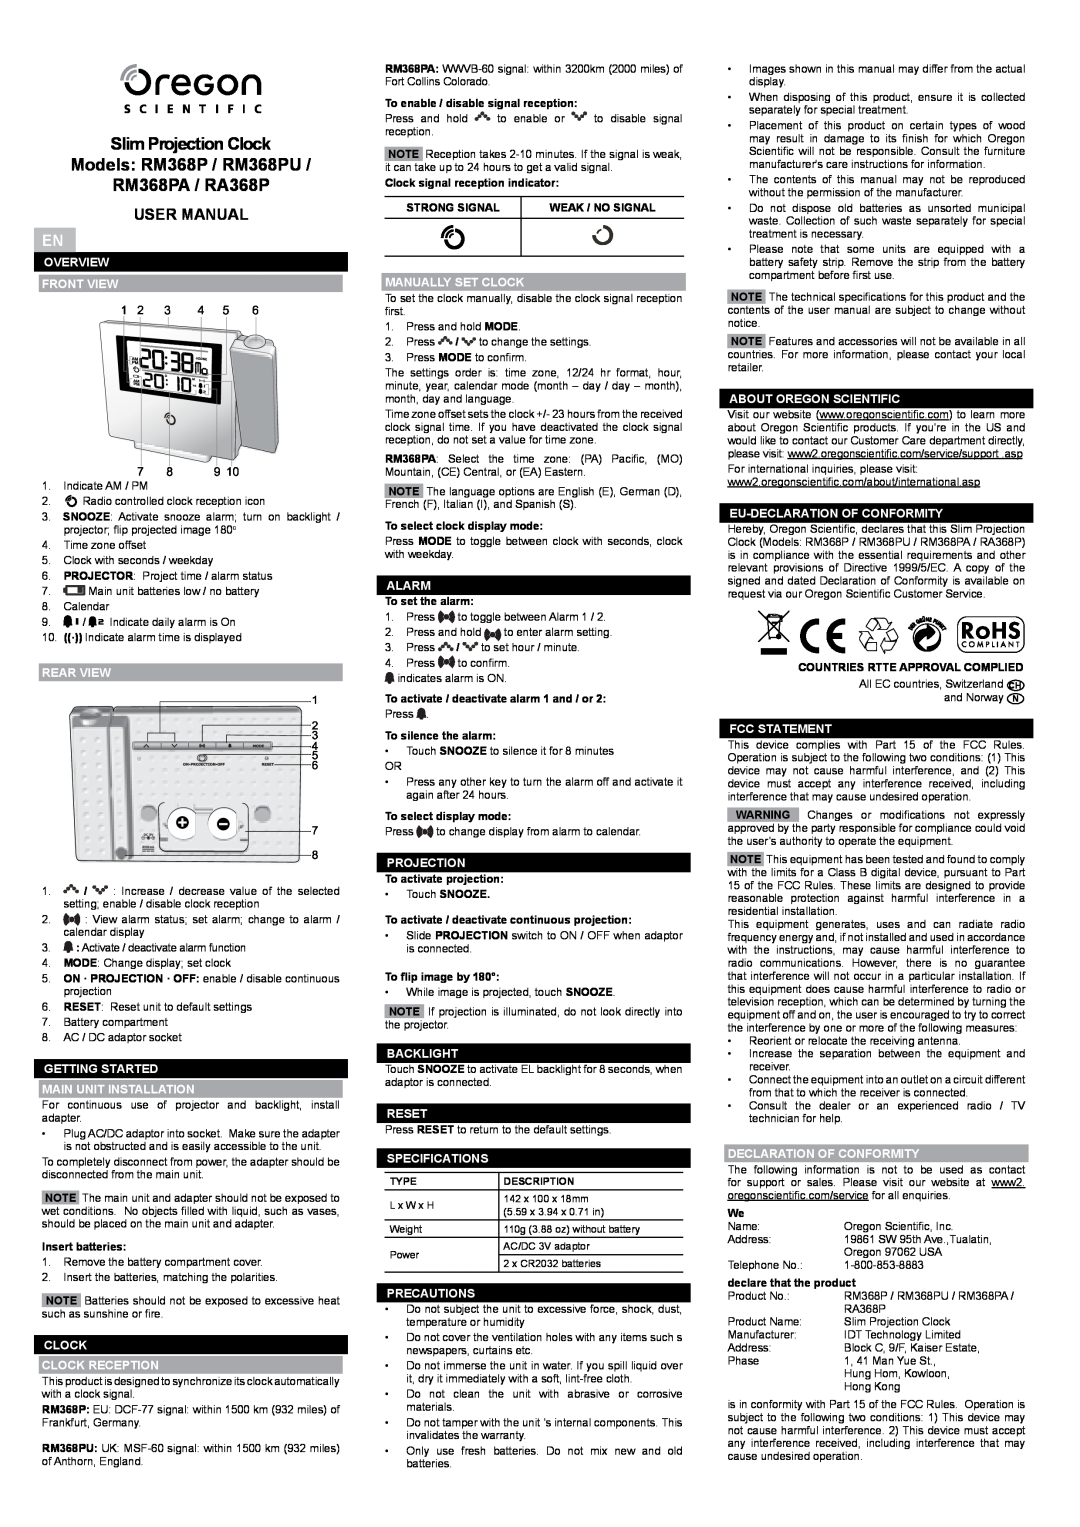 Oregon user manual Slim Projection Clock Models RM368P / RM368PU RM368PA / RA368P, User Manual 